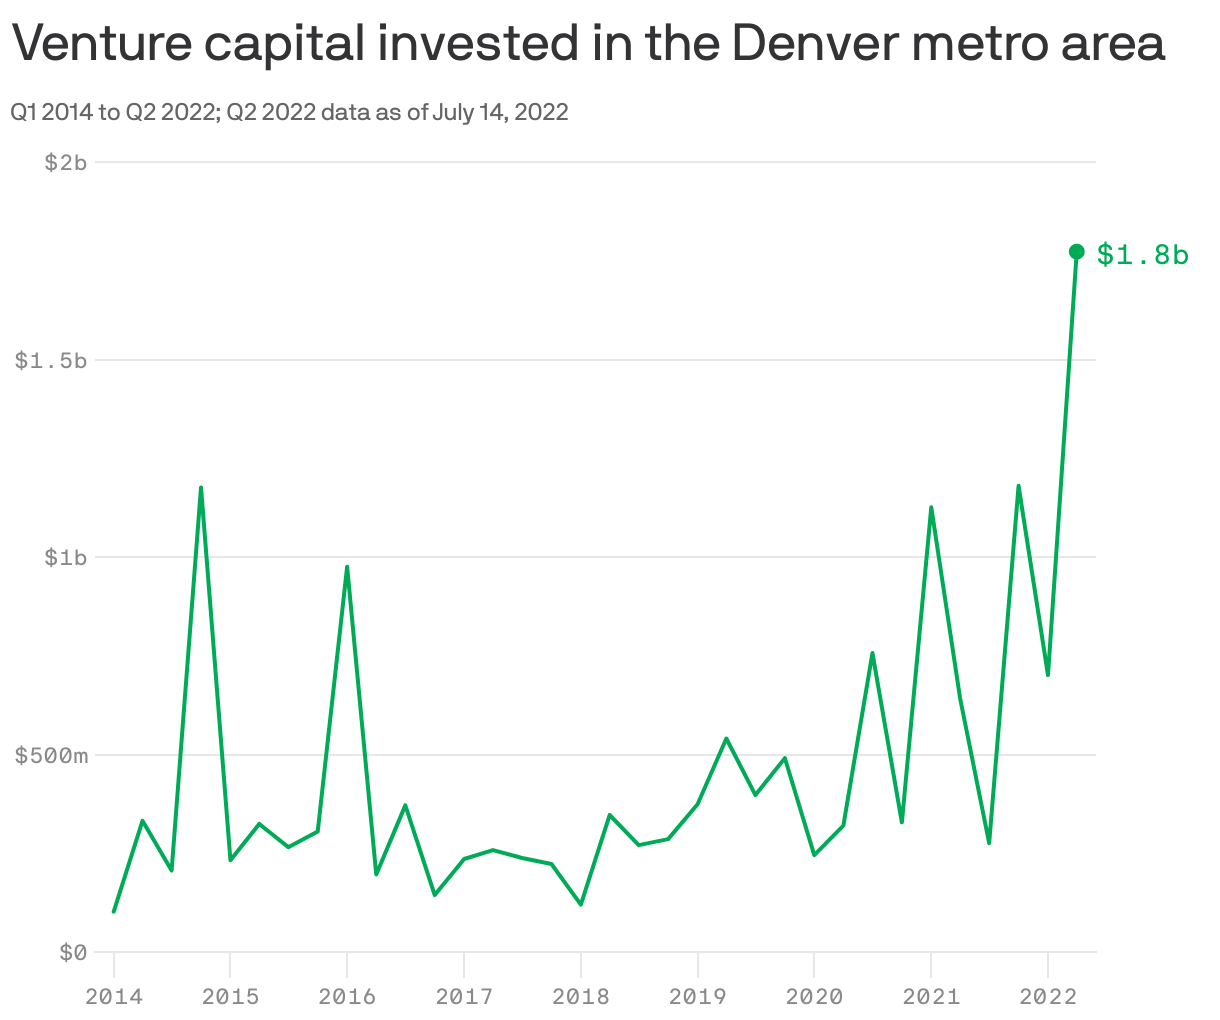 Venture capital invested in the Denver metro area